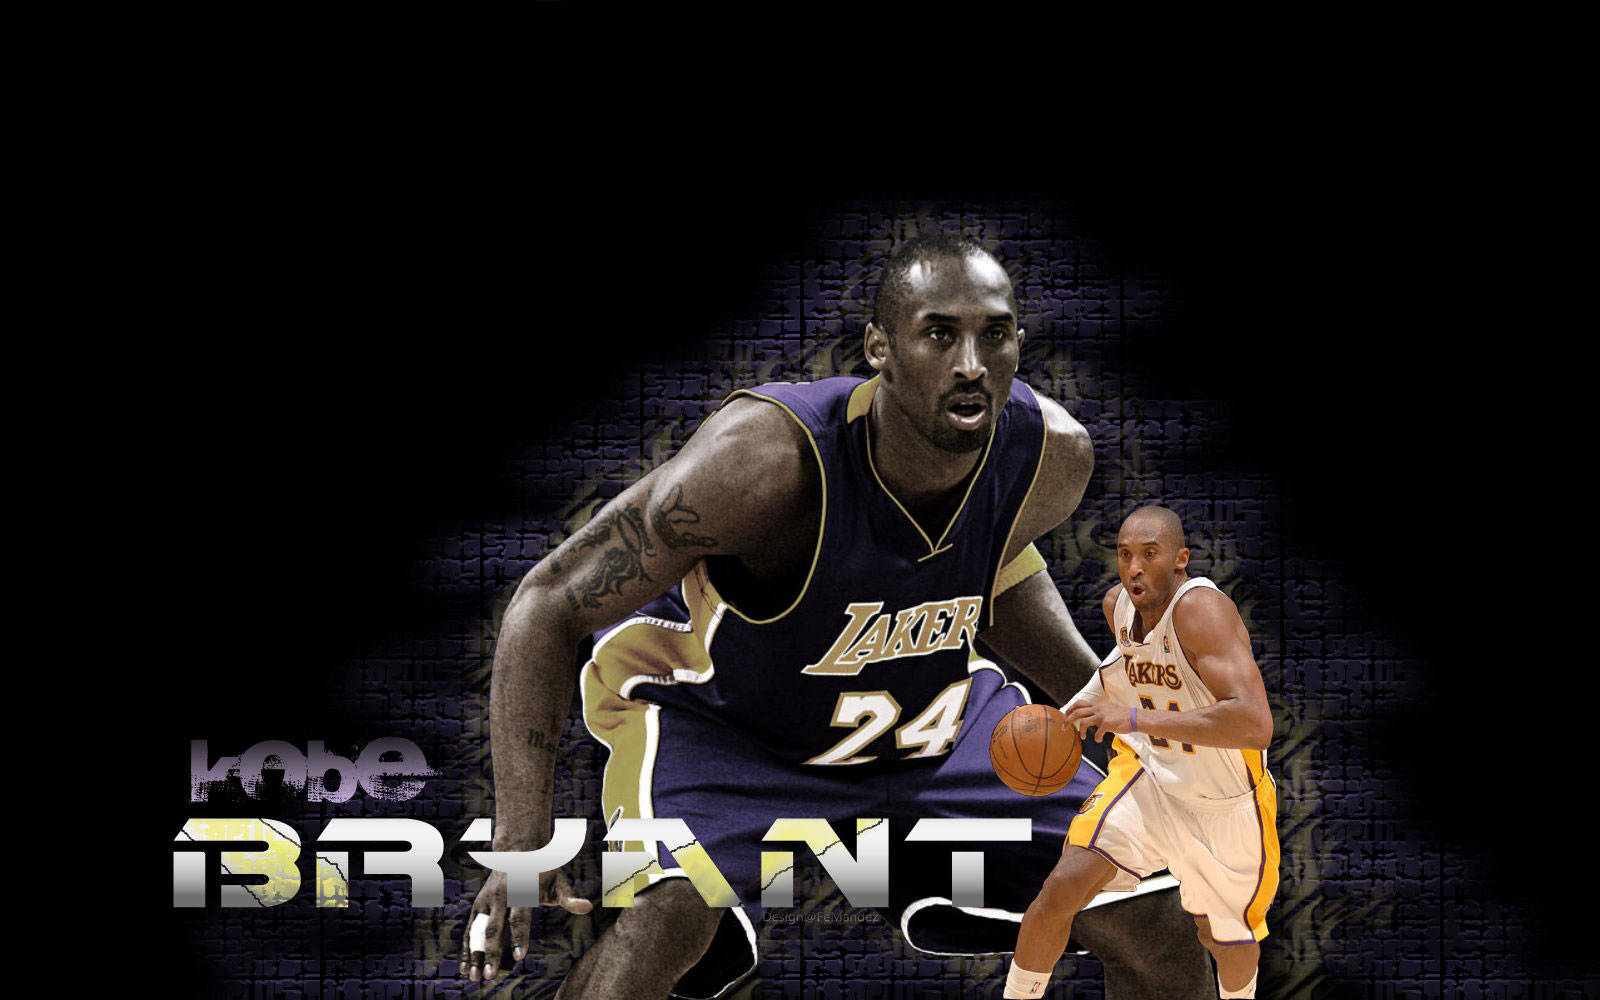 Kobe Bryant Defense Widescreen Wallpaper | Basketball Wallpapers at BasketWallpapers.com